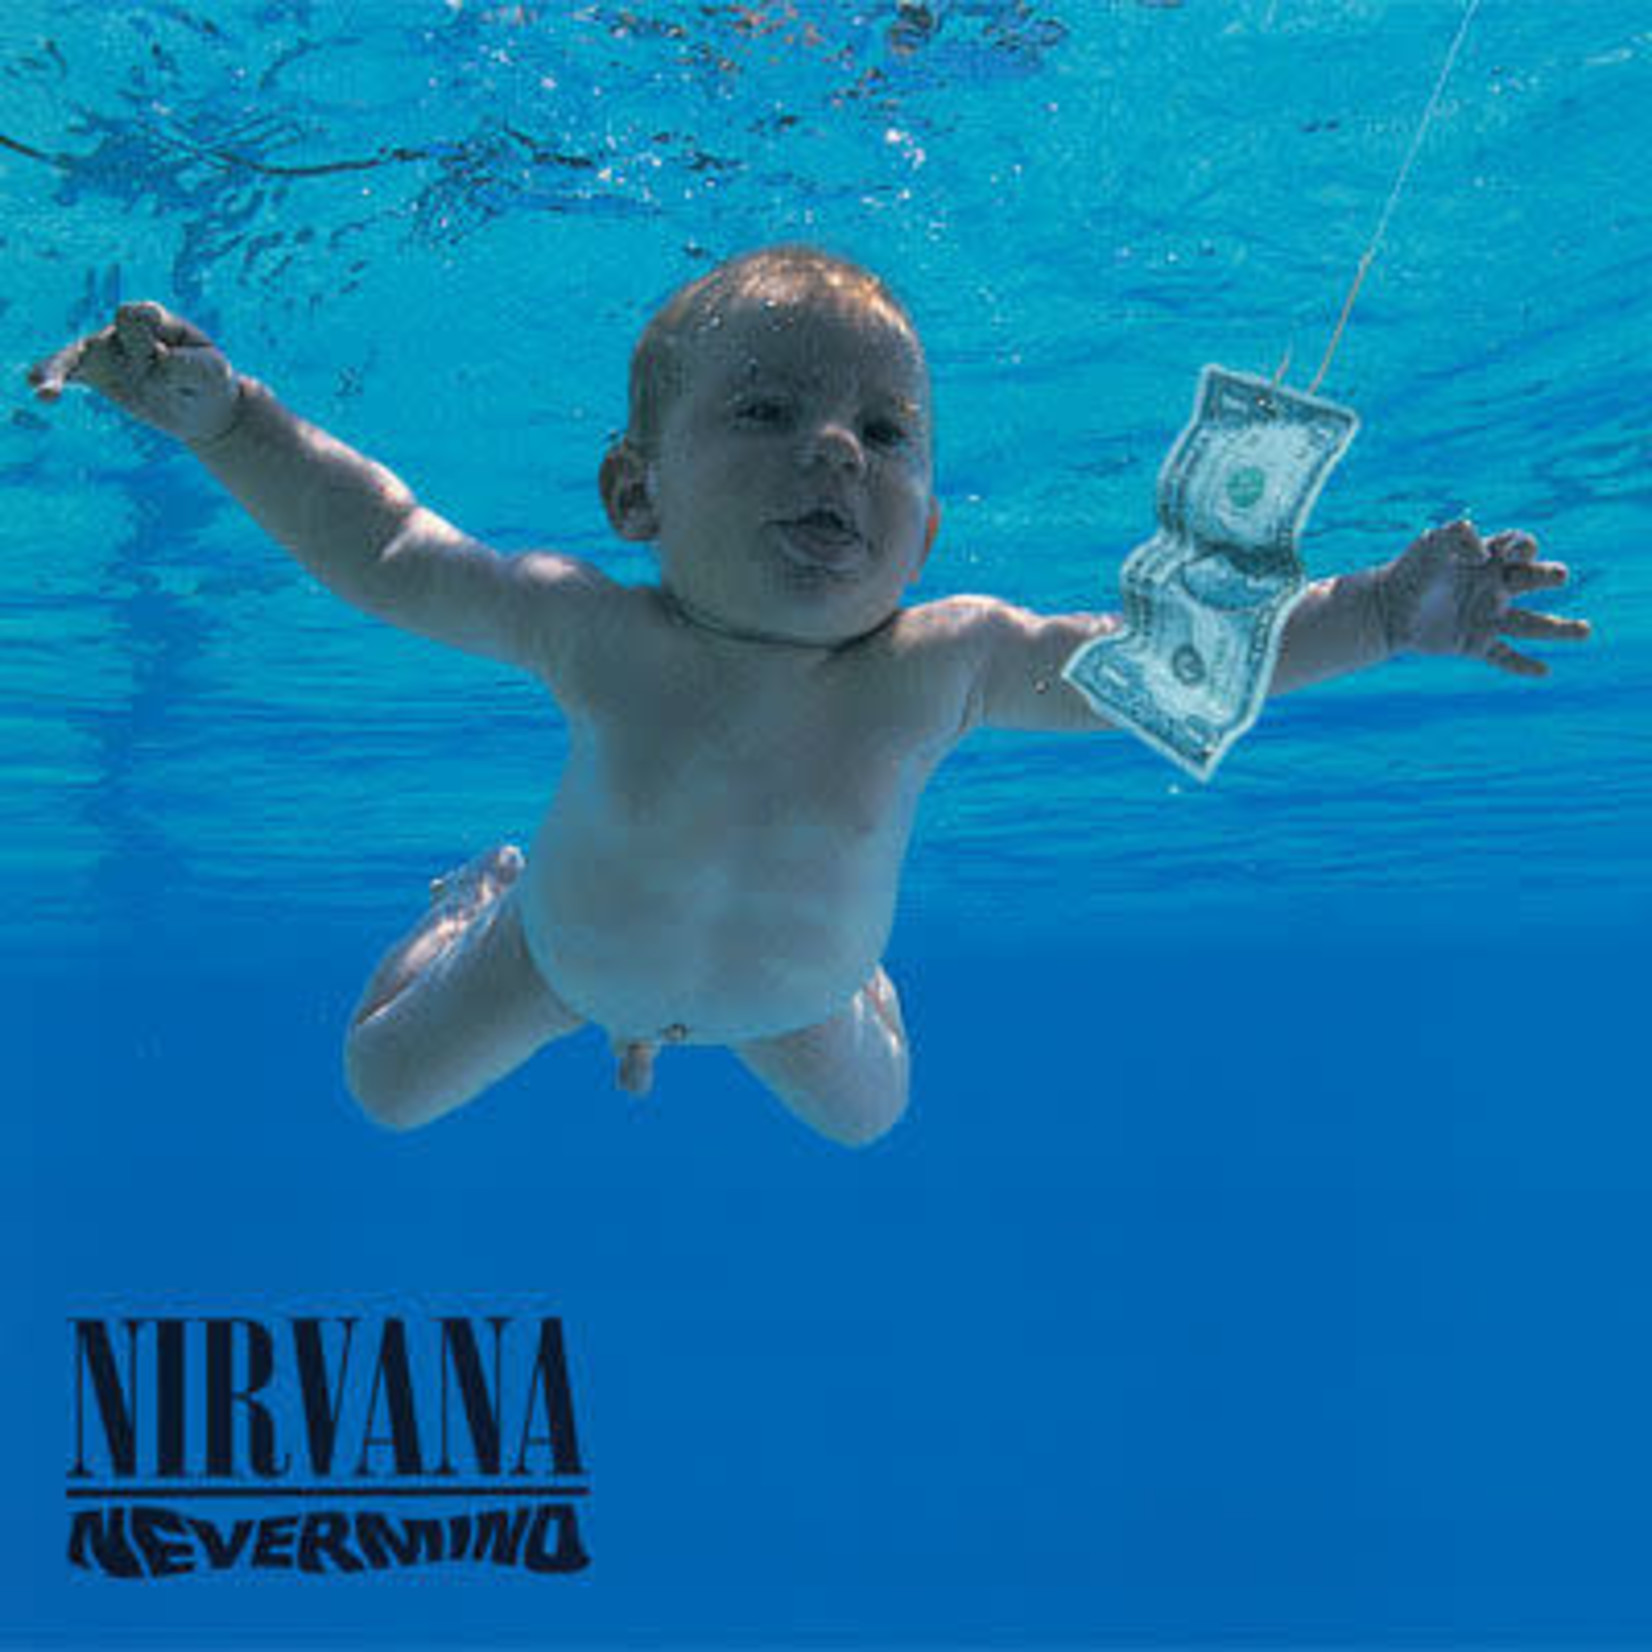 [New] Nirvana - Nevermind 30th Anniversary (8LP, plus bonus 7" & book, limited super deluxe edition)